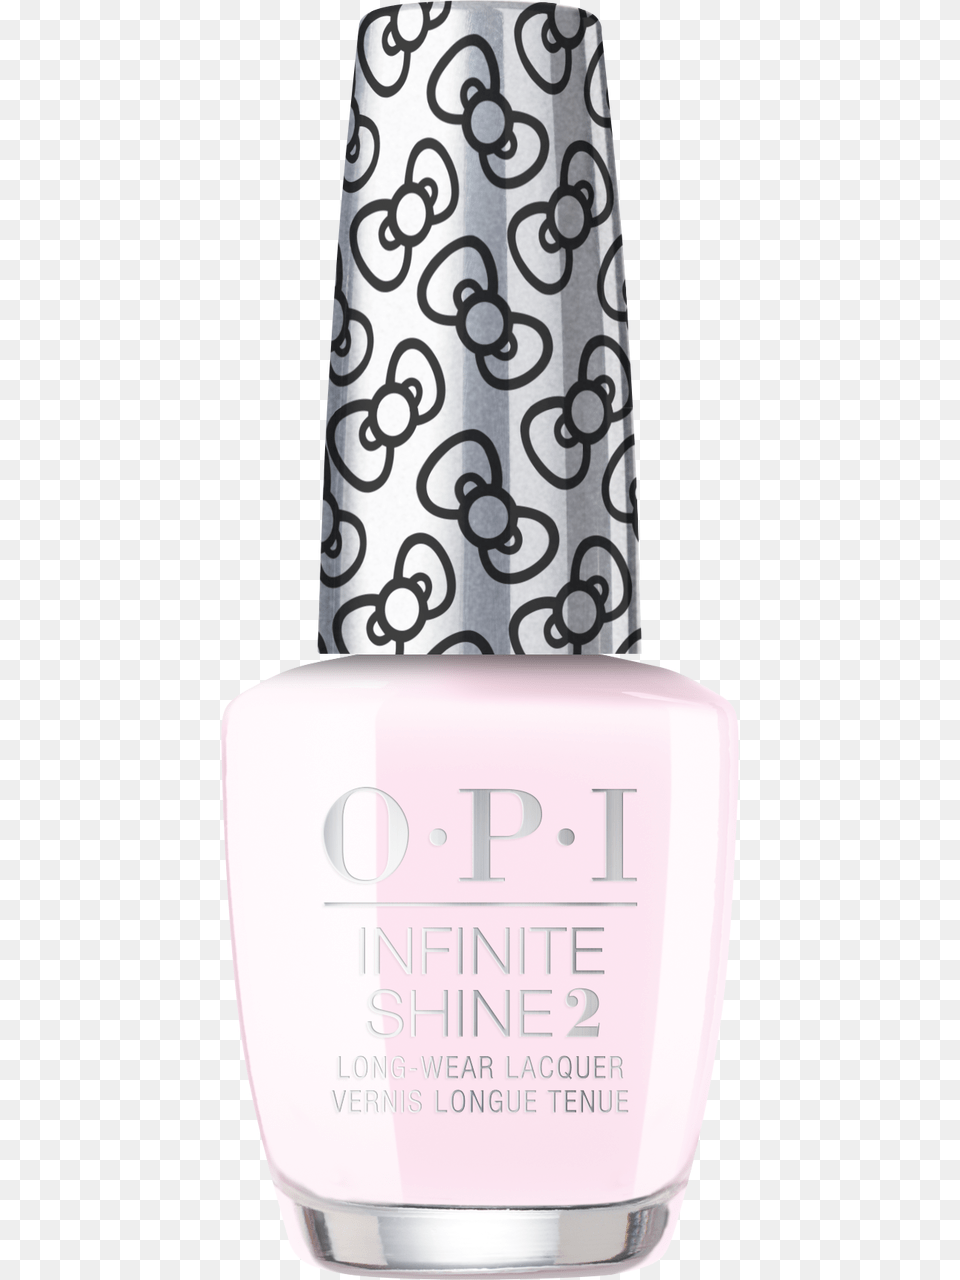 Opi Infinite Shine Opi Infinite Shine Hello Kitty Collection Pile, Cosmetics, Nail Polish Png Image